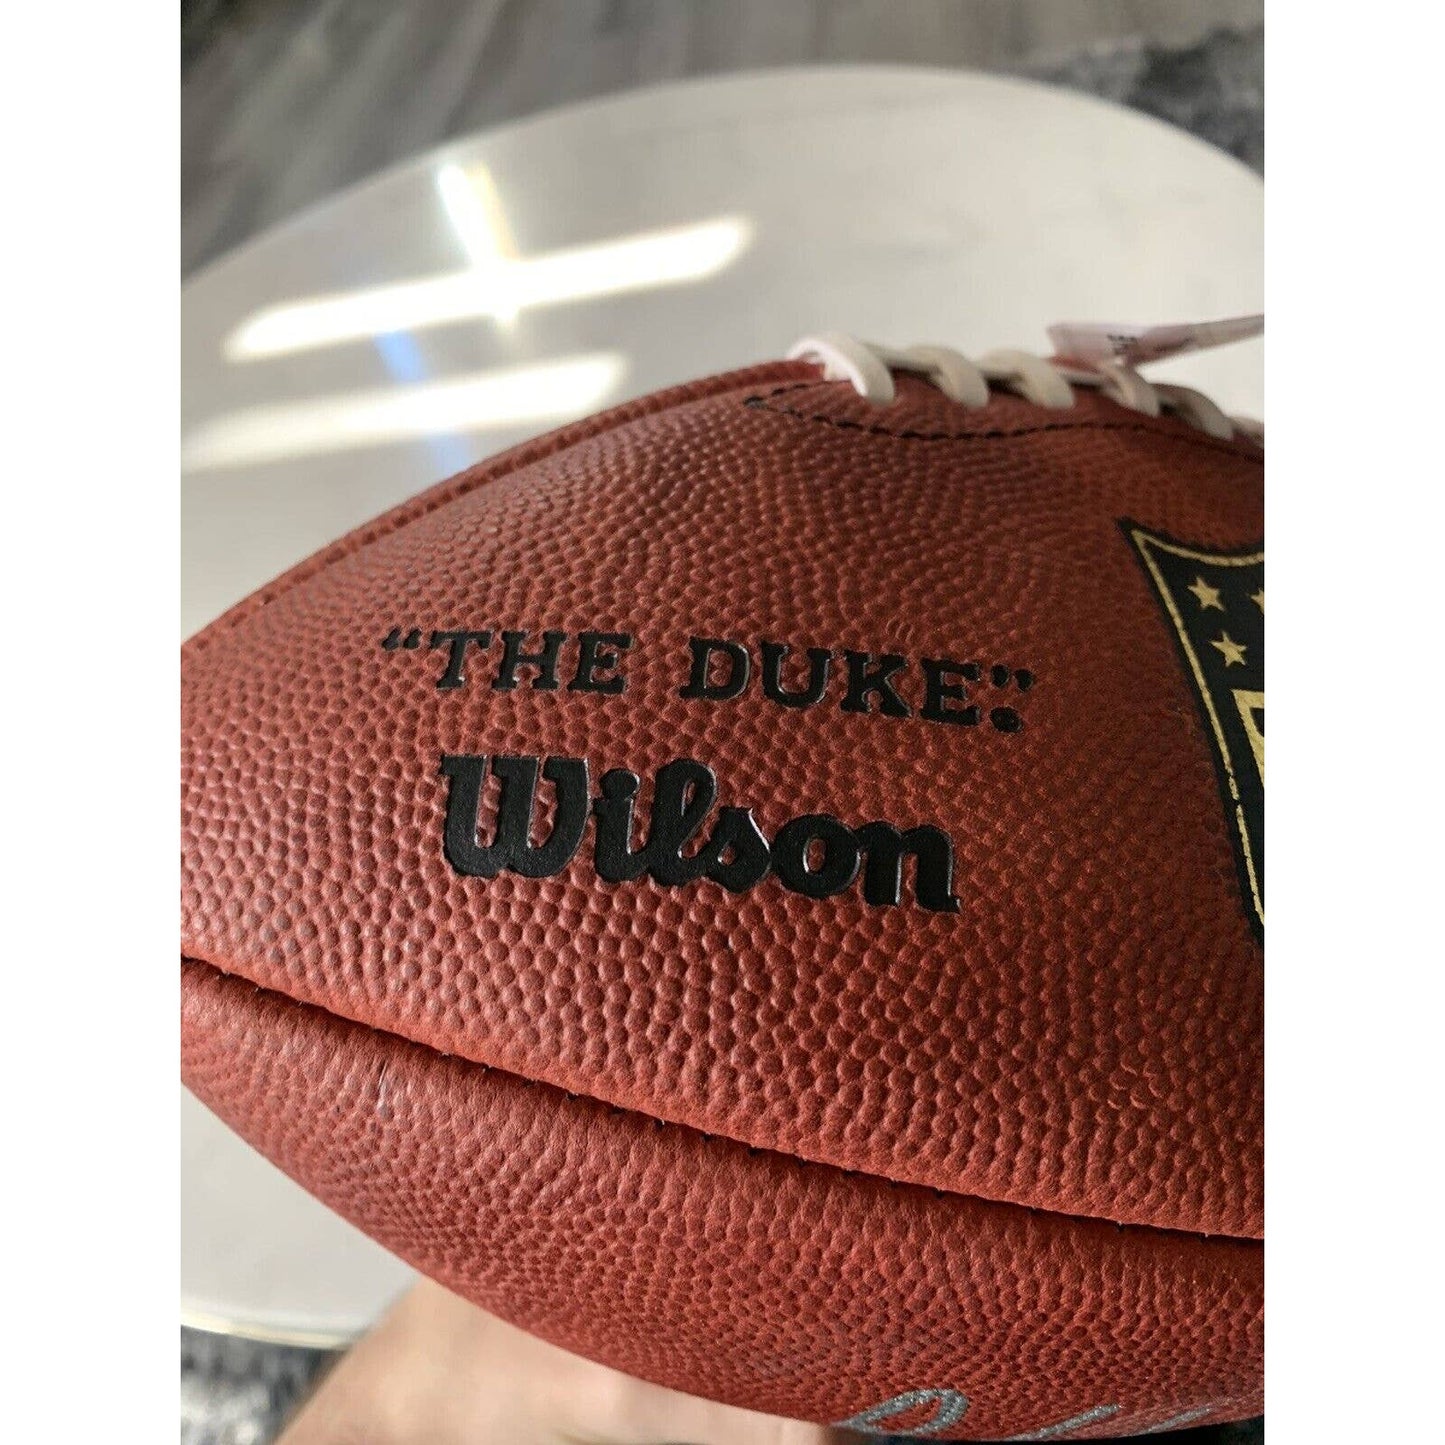 Todd Gurley II Autographed/Signed Duke Football Falcons Georgia READ - TreasuresEvolved